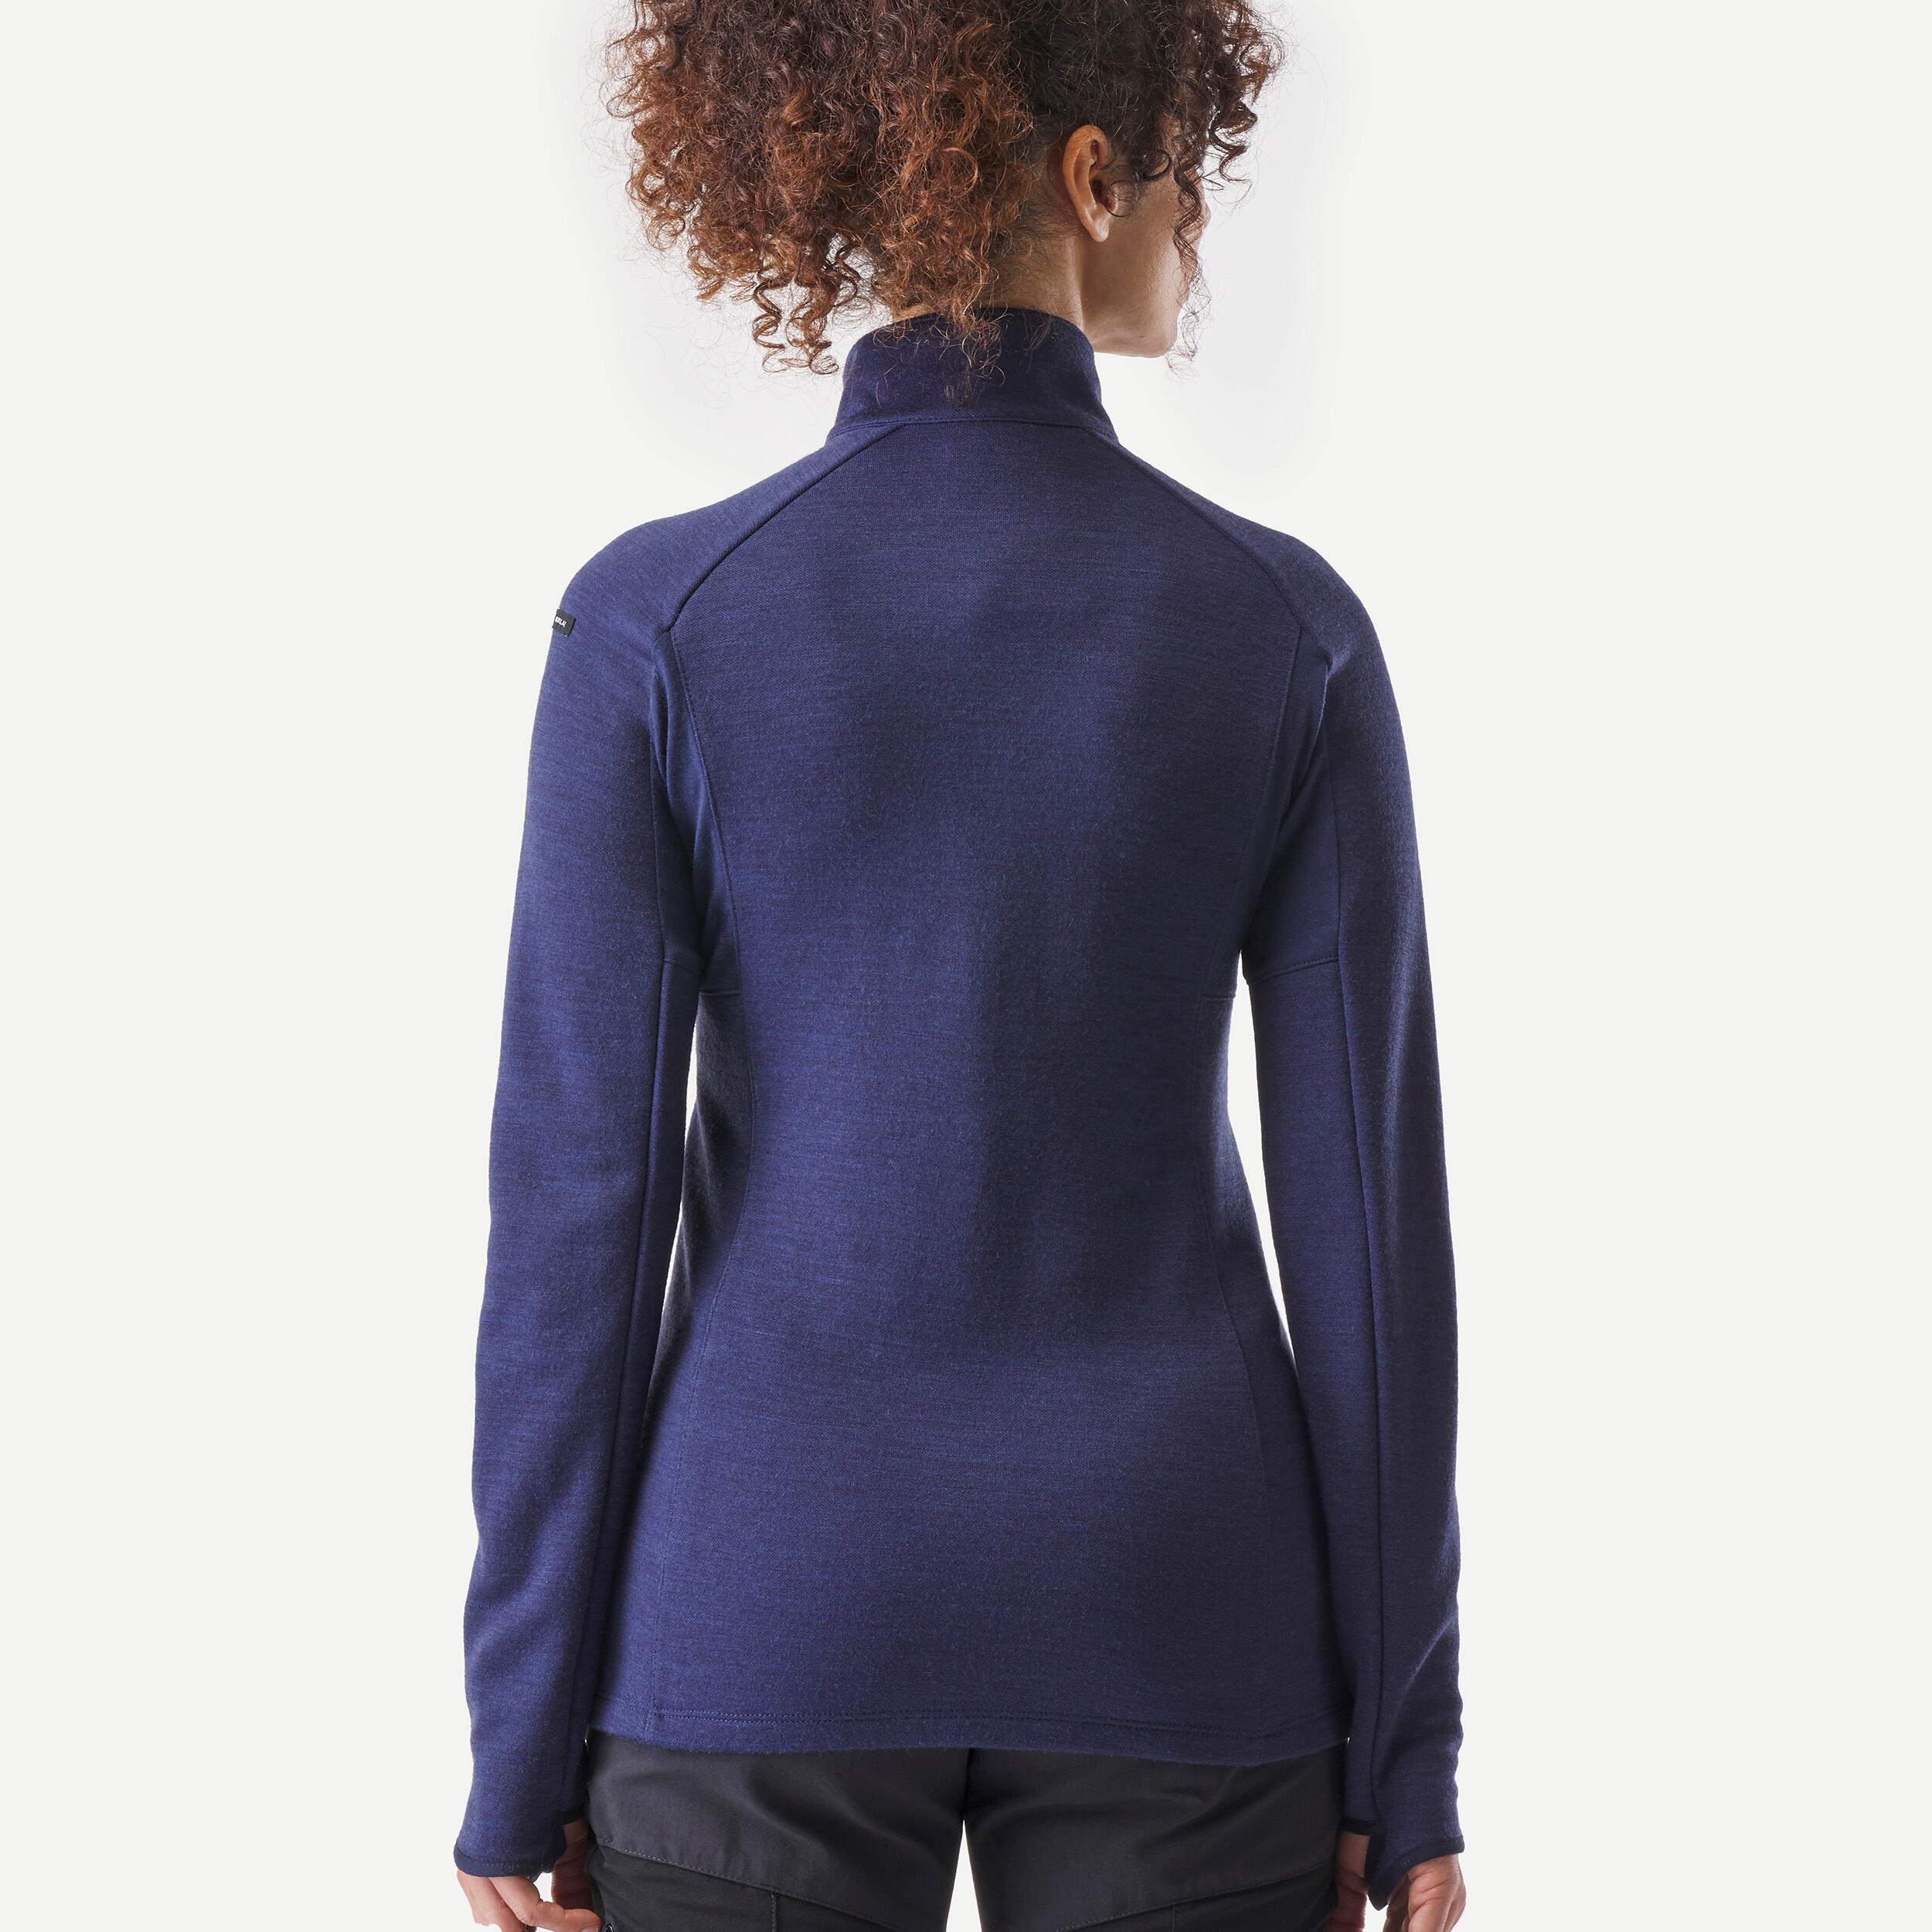 Women's Merino Wool Long-Sleeved Trekking T-Shirt - MT900 6/10